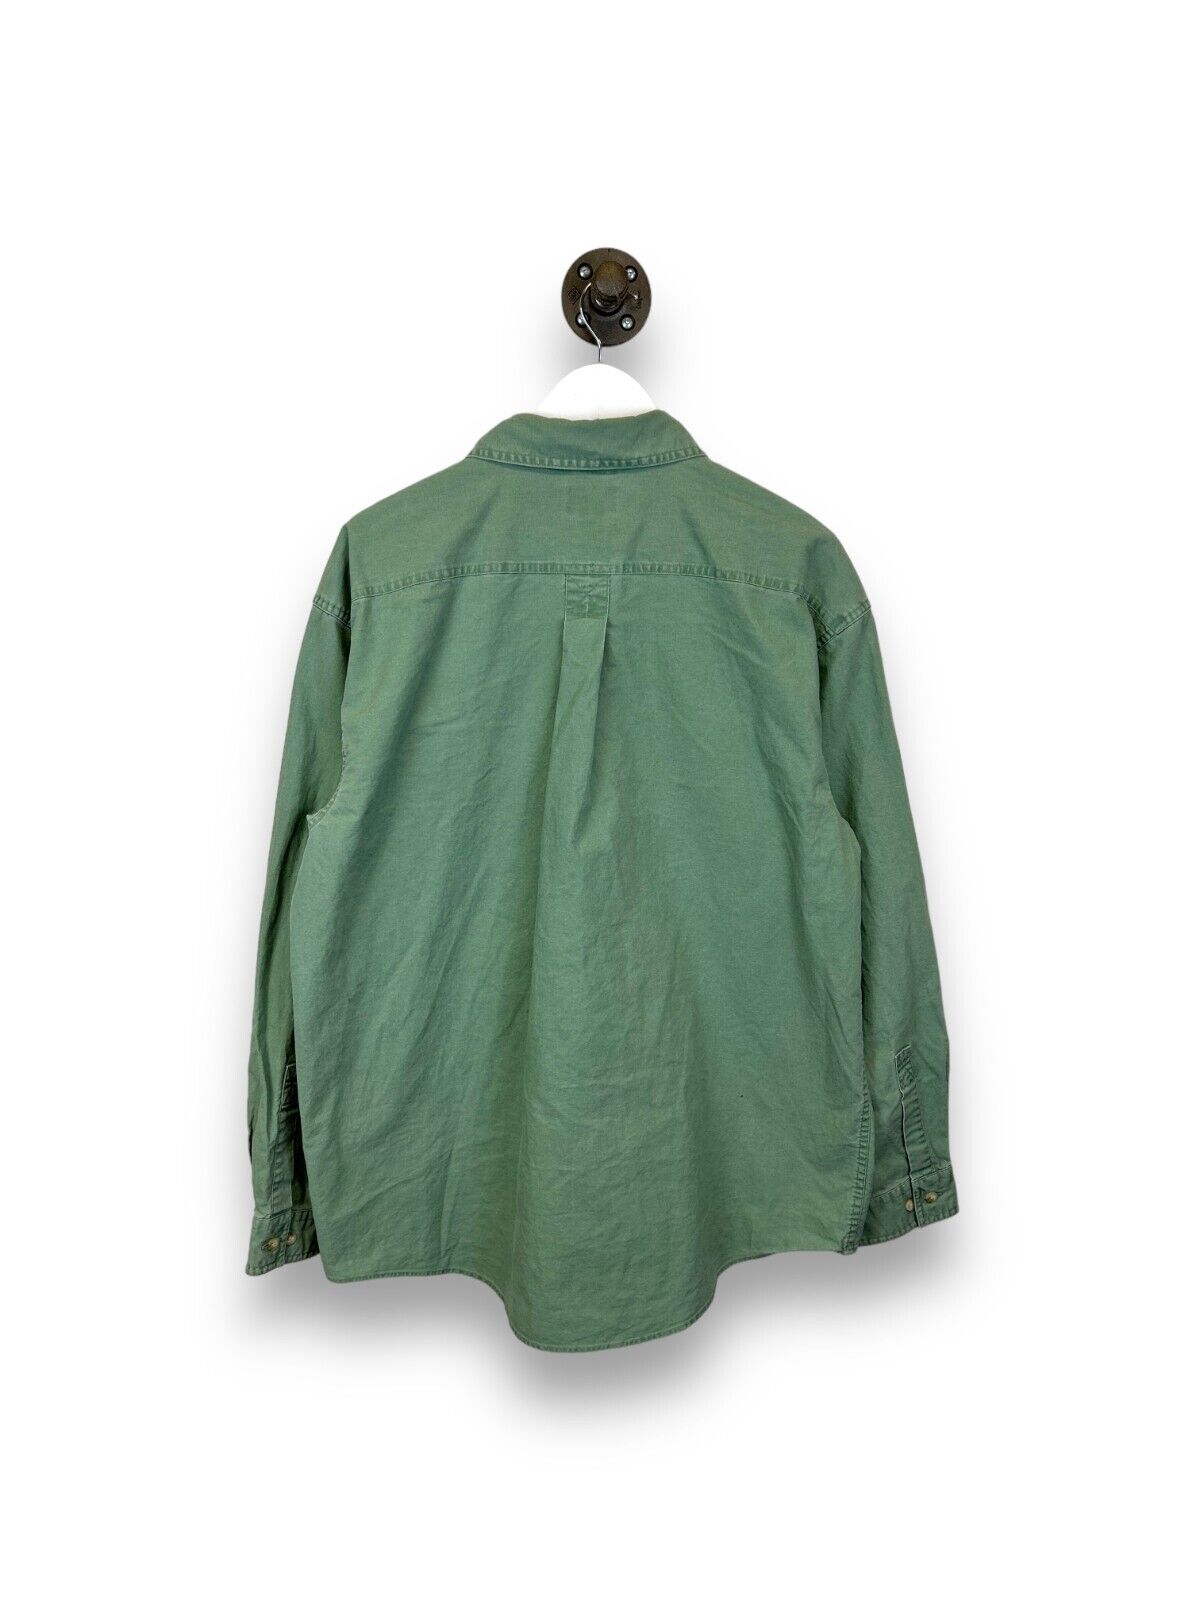 Vintage L.L. Bean Double Pocket Long Sleeve Button Up Shirt Size Large Green